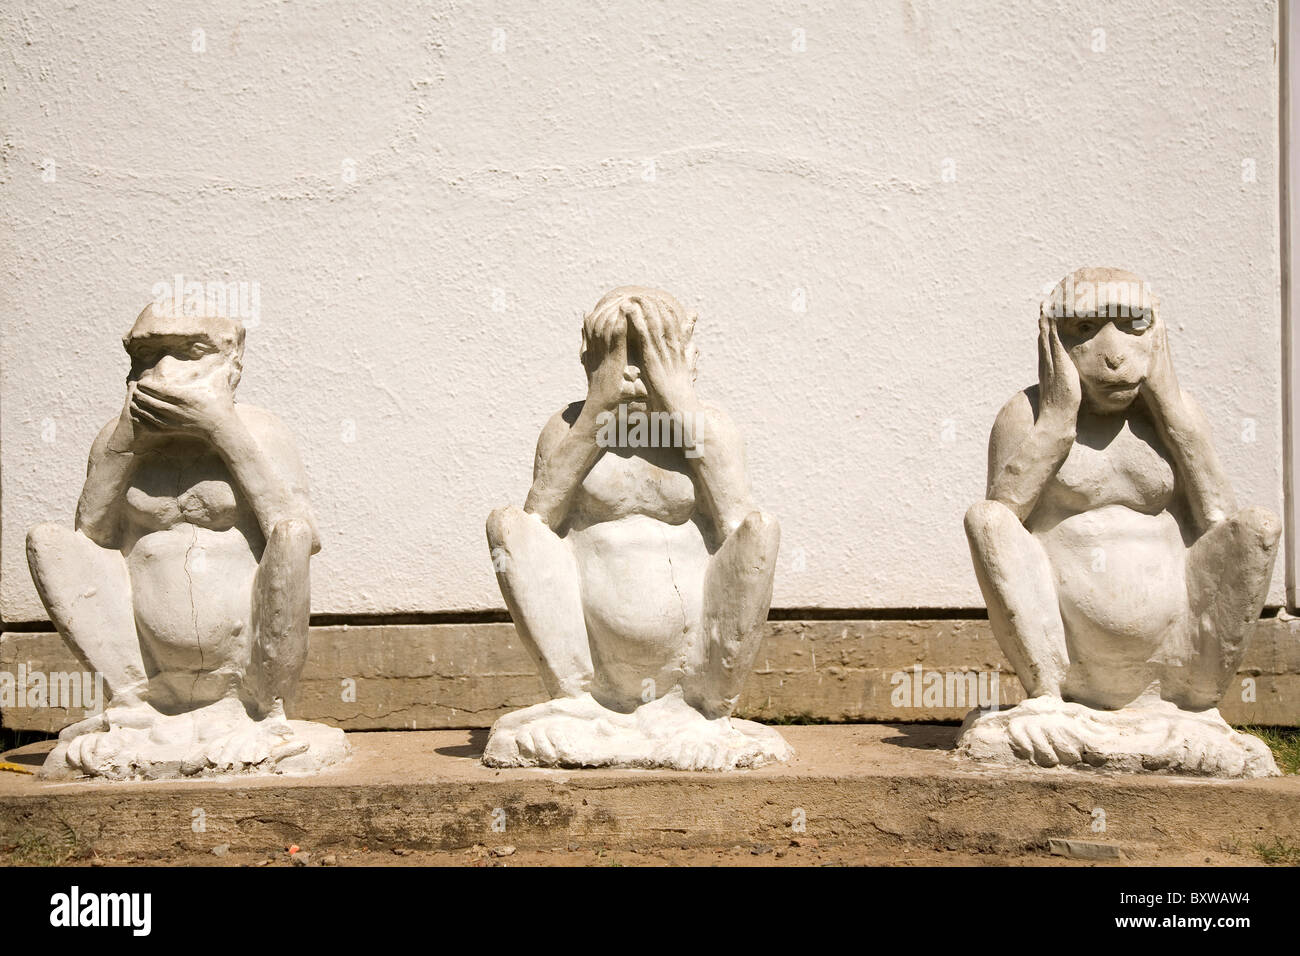 Monkey statues in the Sabarmati Ashram (also known as the Gandhi or Satyagraha or Harijan Ashram) in Ahmedabad, Gujarat, India. Stock Photo